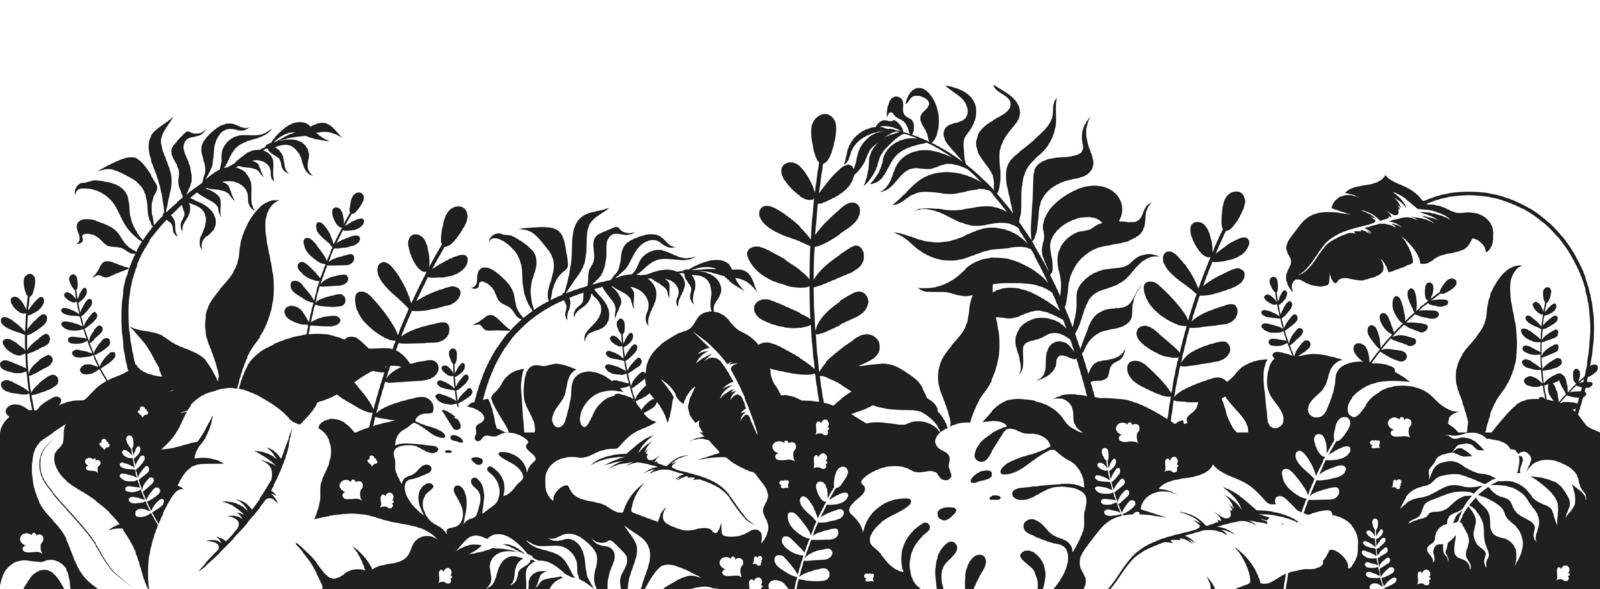 Tropical foliage black silhouette vector illustration. Wild vegetation. Botanical and herbal decoration. Shrubs and bushes. Exotic monochrome landscape. Subtropical leaves 2d cartoon shape